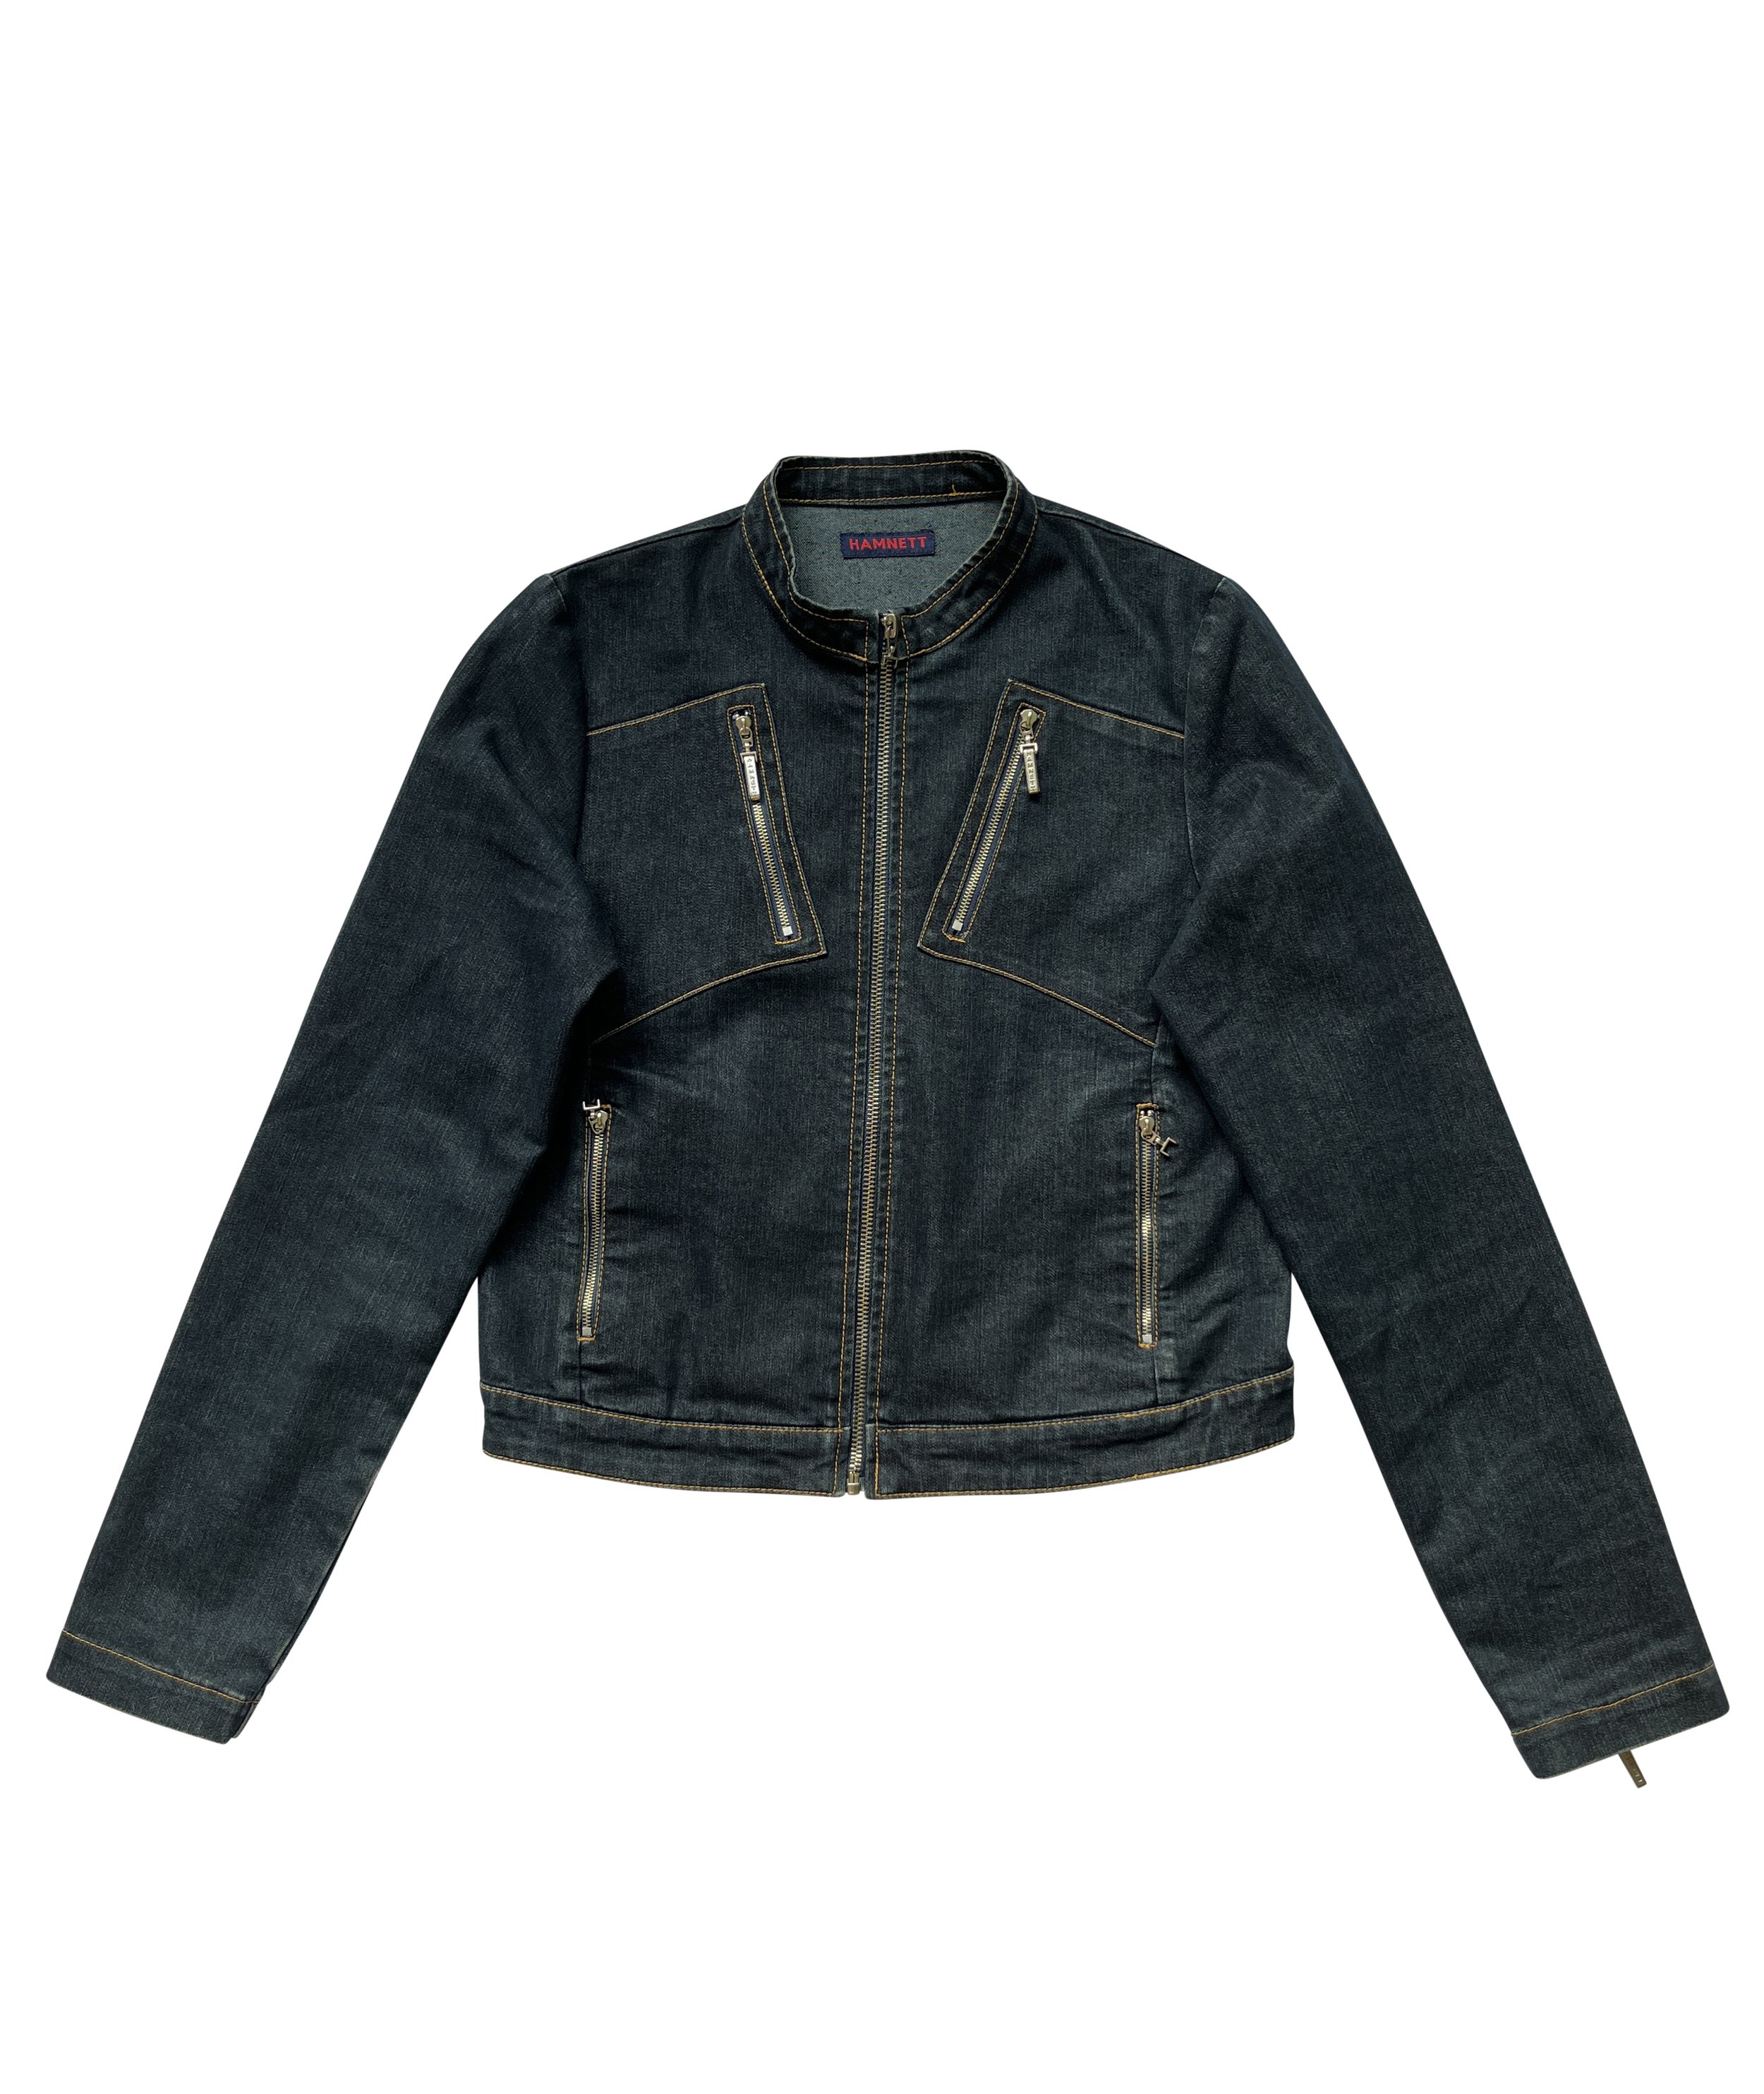 Katharine Hamnett denim jacket — Secundo Store